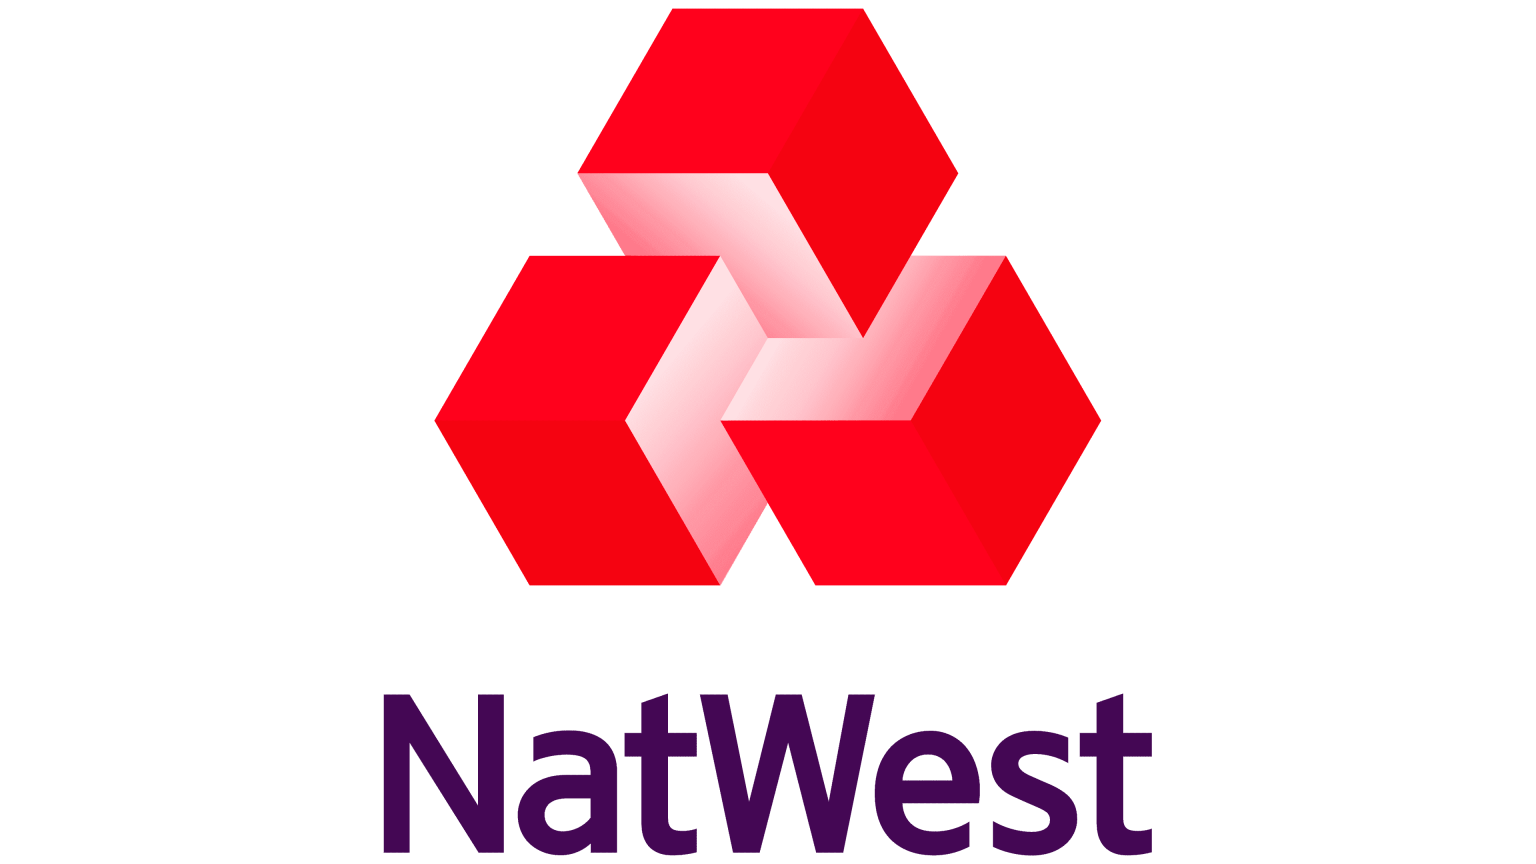 natwest online travel insurance